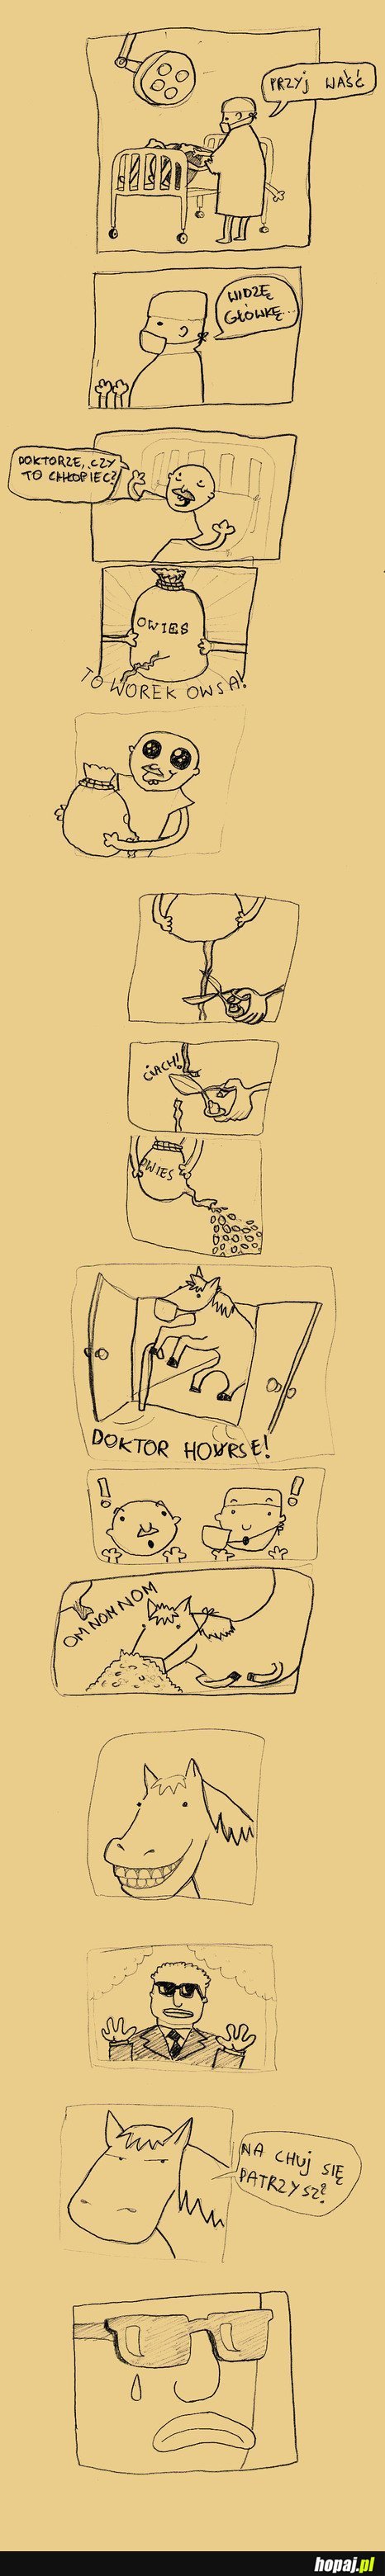 Doktor Horse